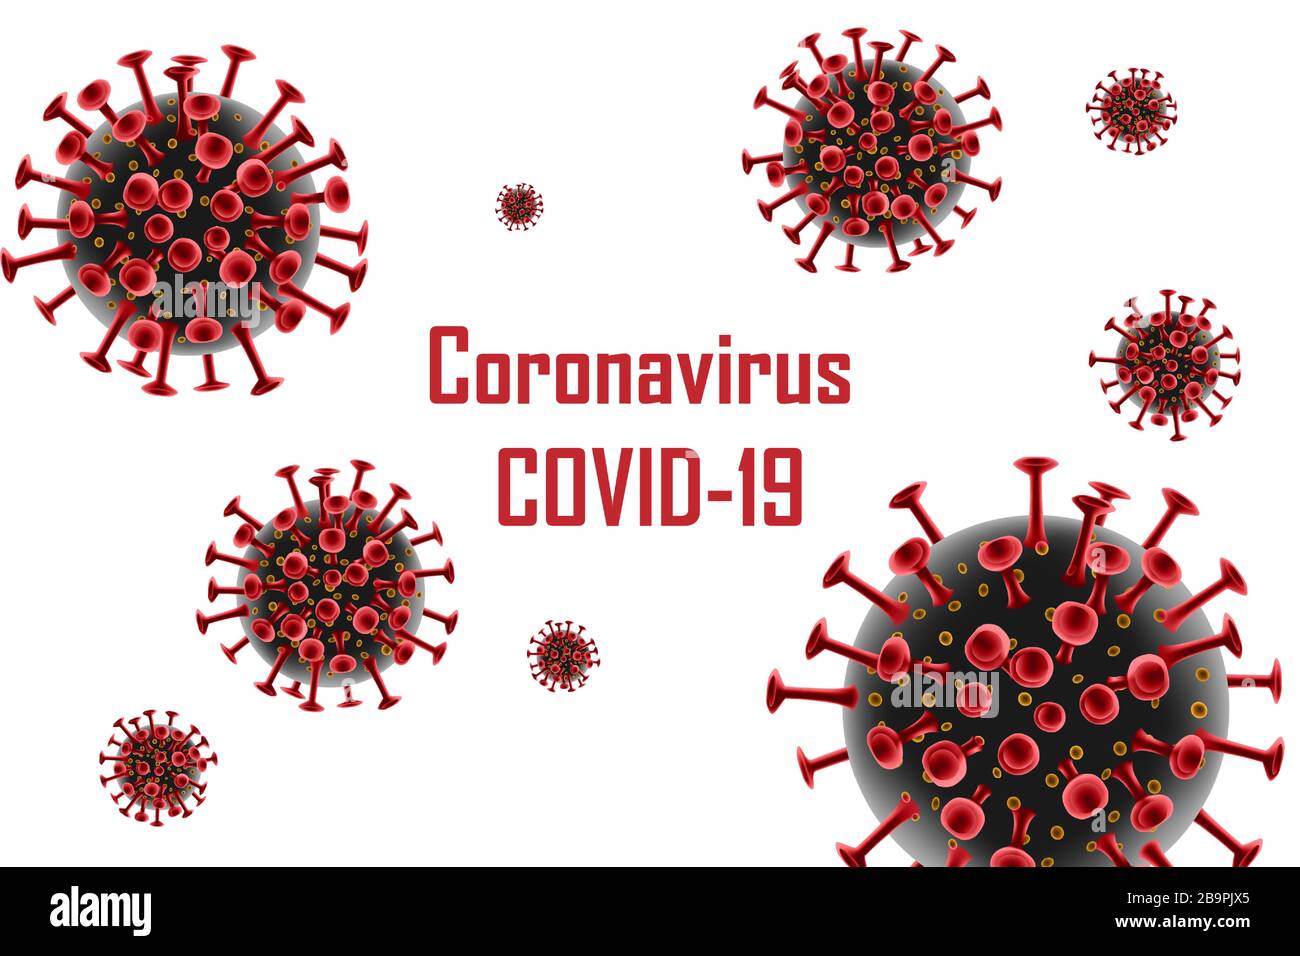 Corona Virus 2019-ncov Banner. Wuhan Viruserkrankung, Coronavirus Infektionen Hintergrund. Abbildung: Vektor des roten Moleküls der Coronavirus-Zelle. Stock Vektor